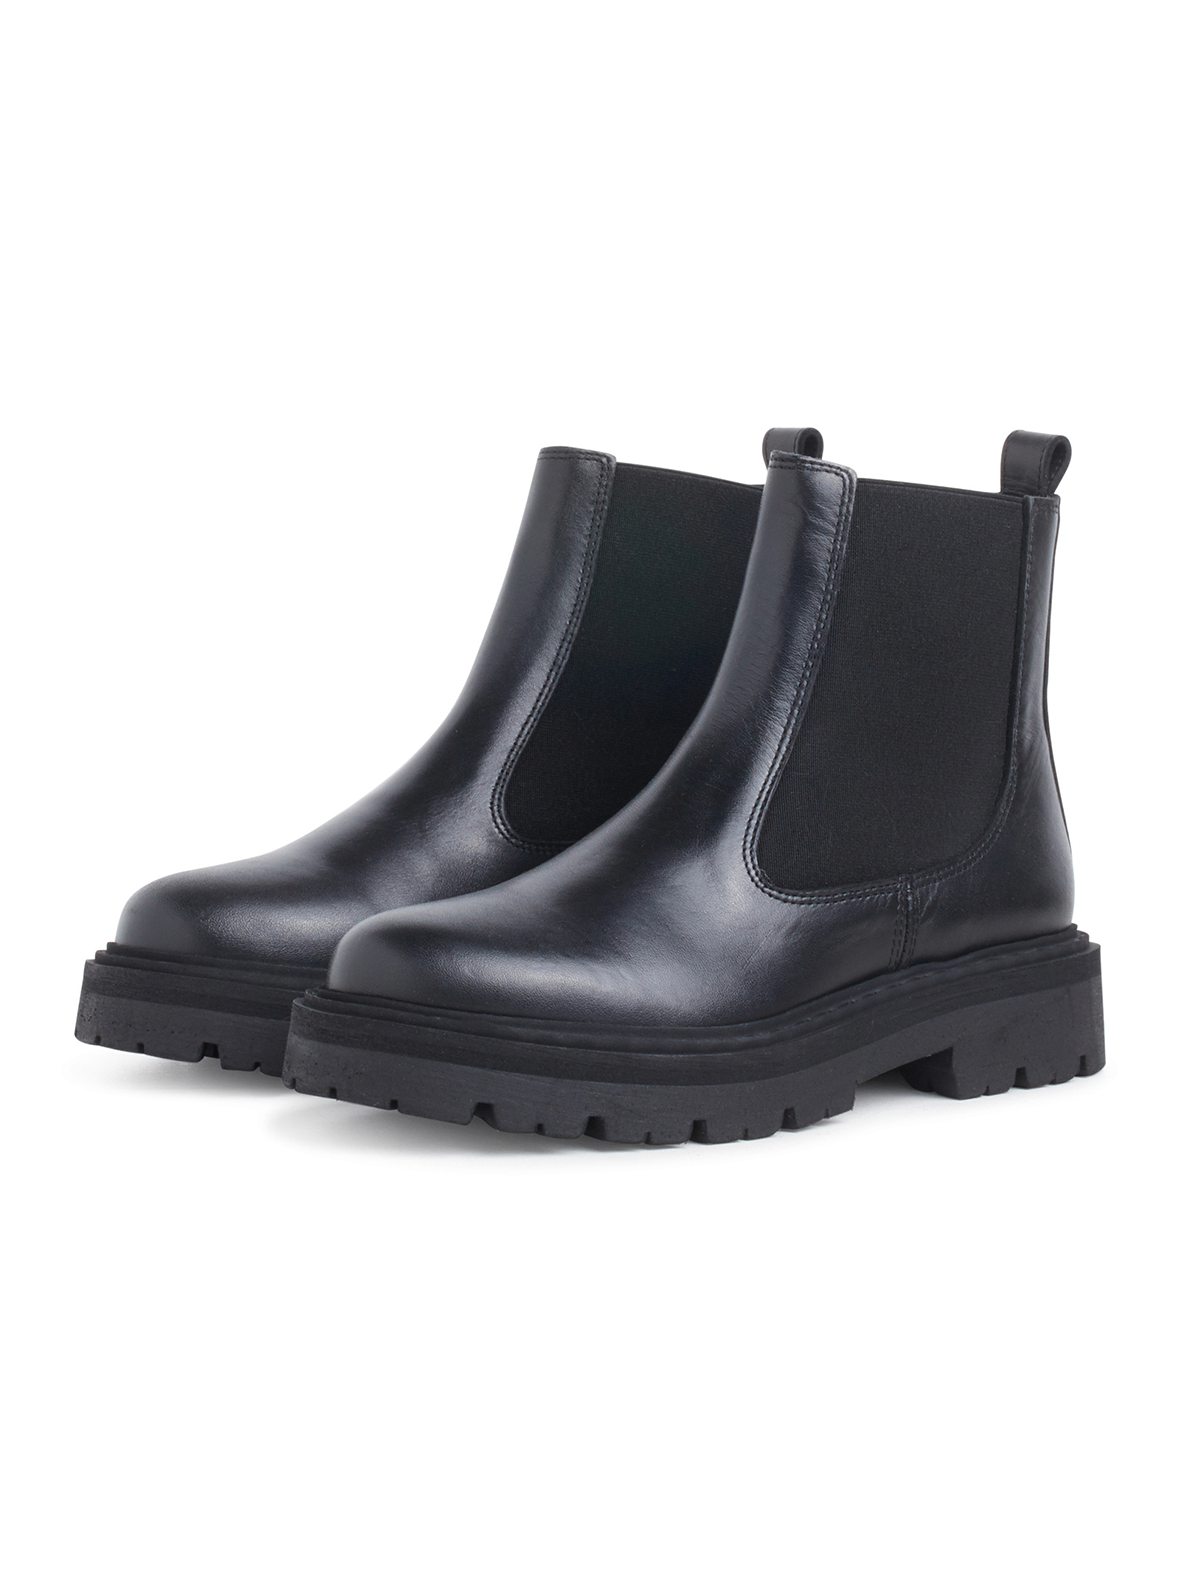 Enula9 Accessories, sko & smykker - Garment - Spike boot - black matte